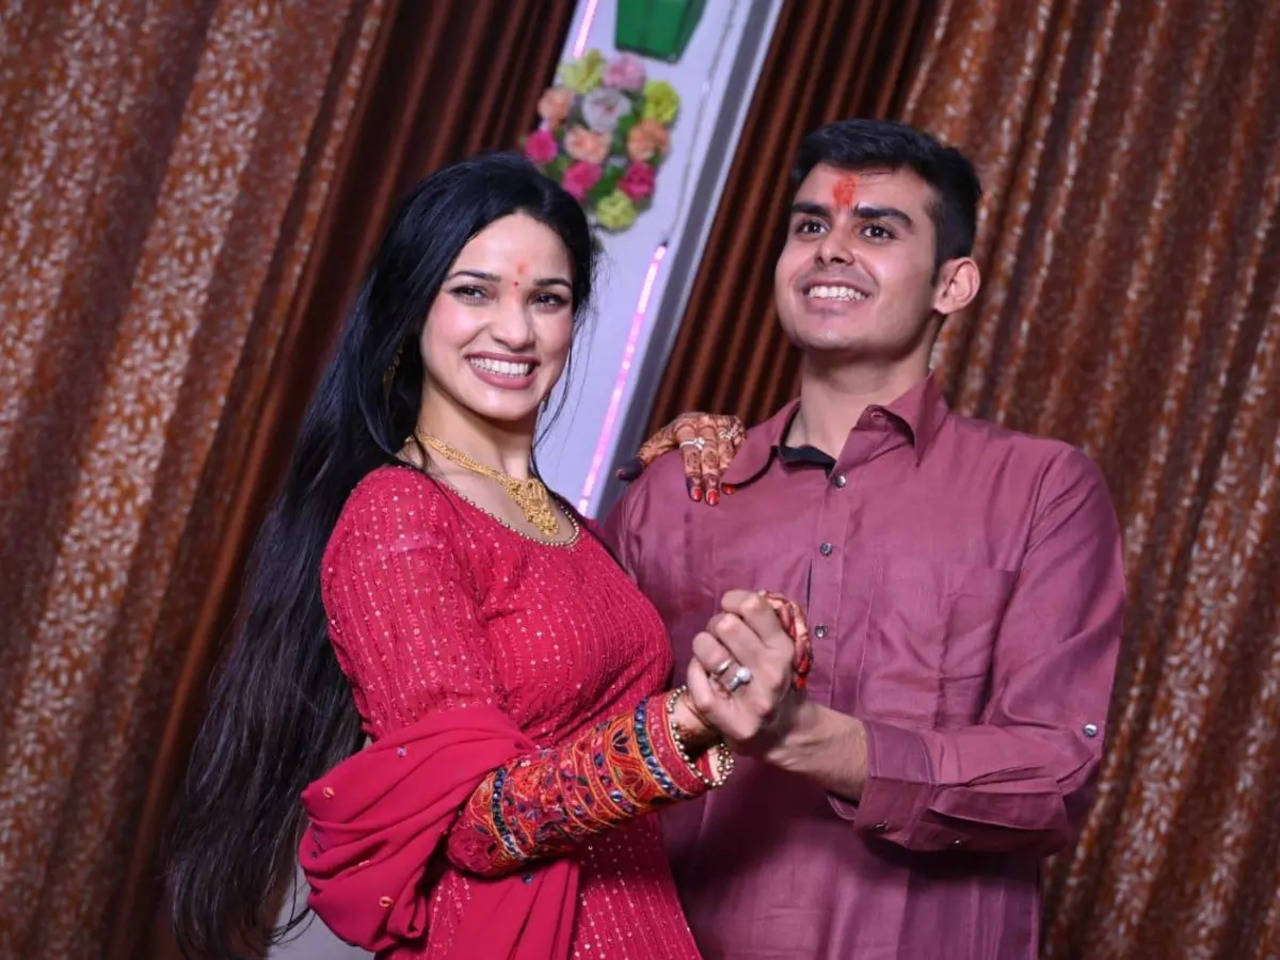 Shrashti Maheshwaris April wedding postponed, the actress will tie the knot later in the year